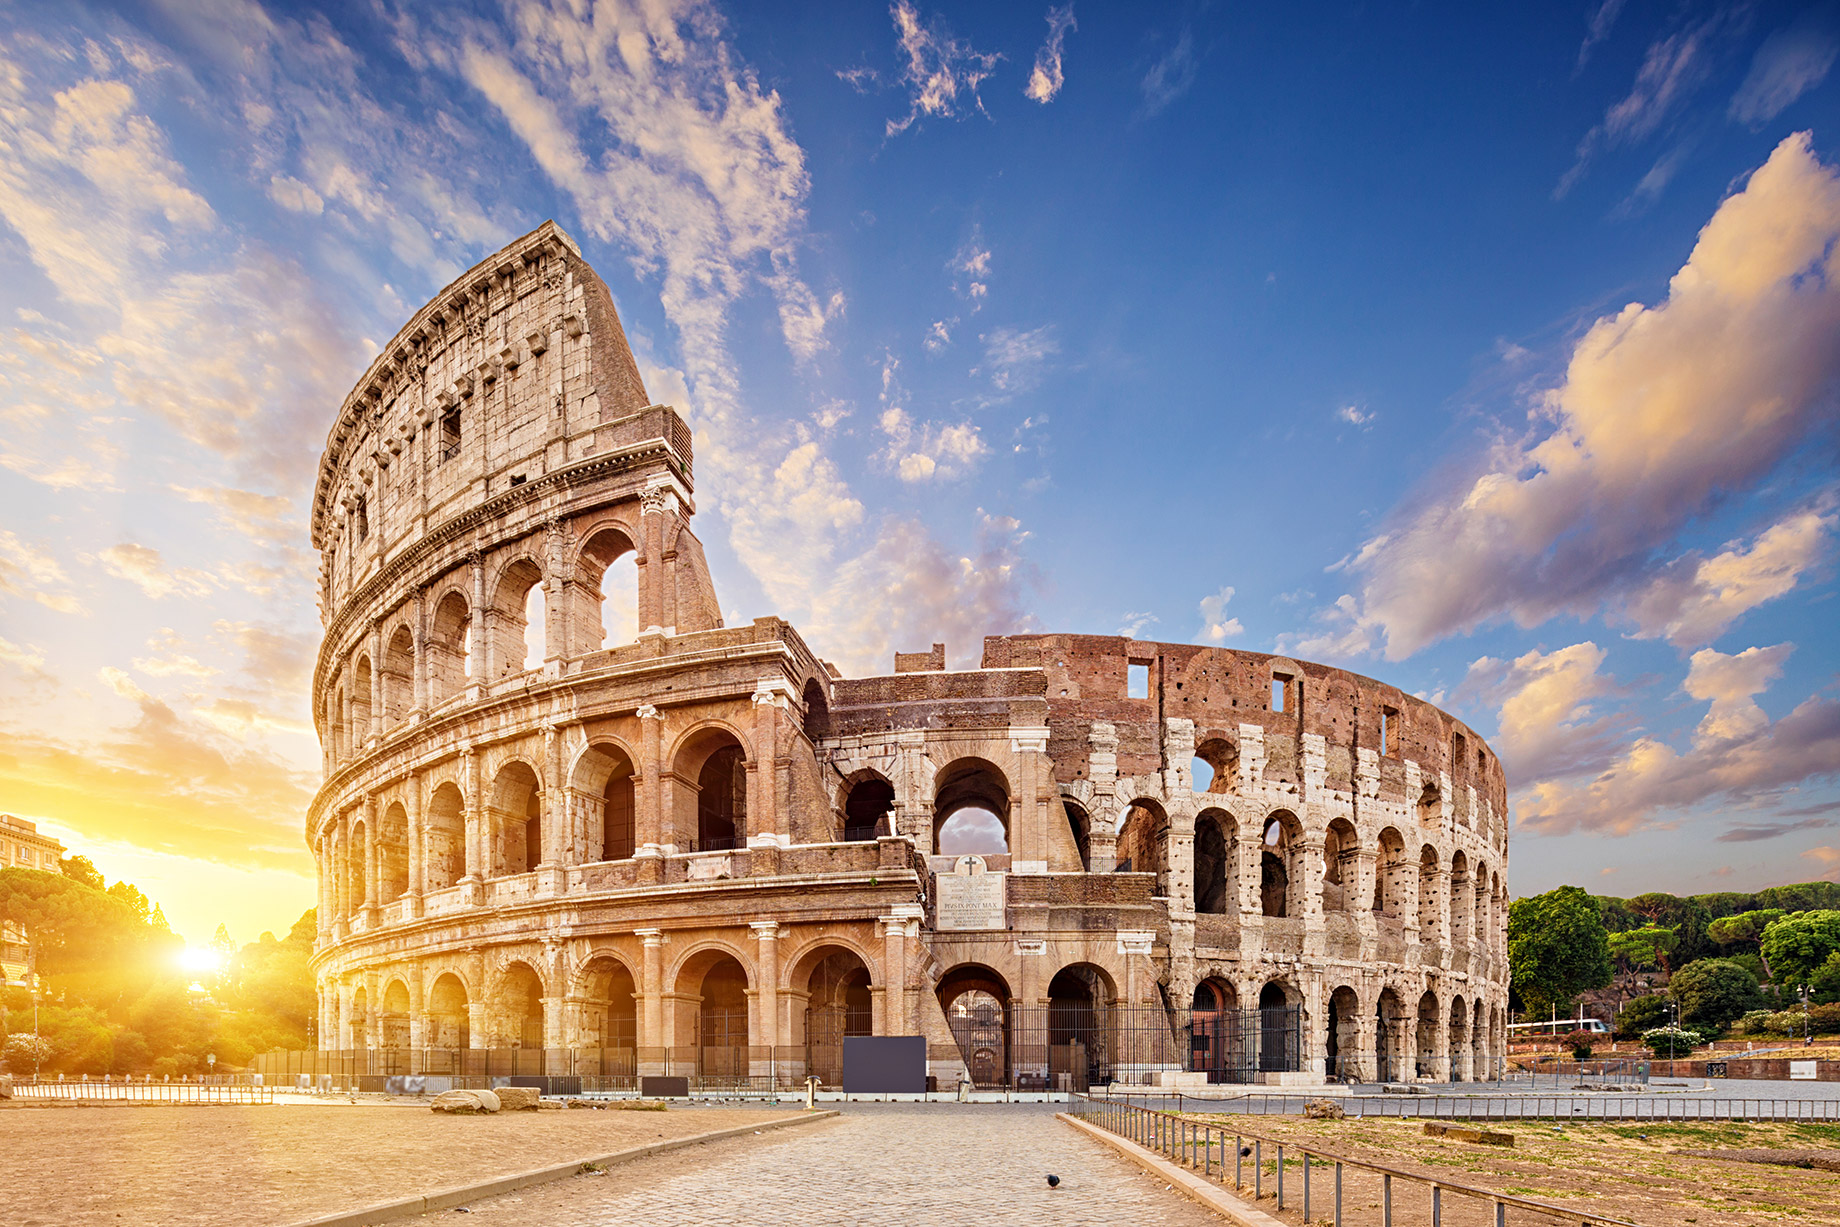 Roman Colosseum - Rome, Italy